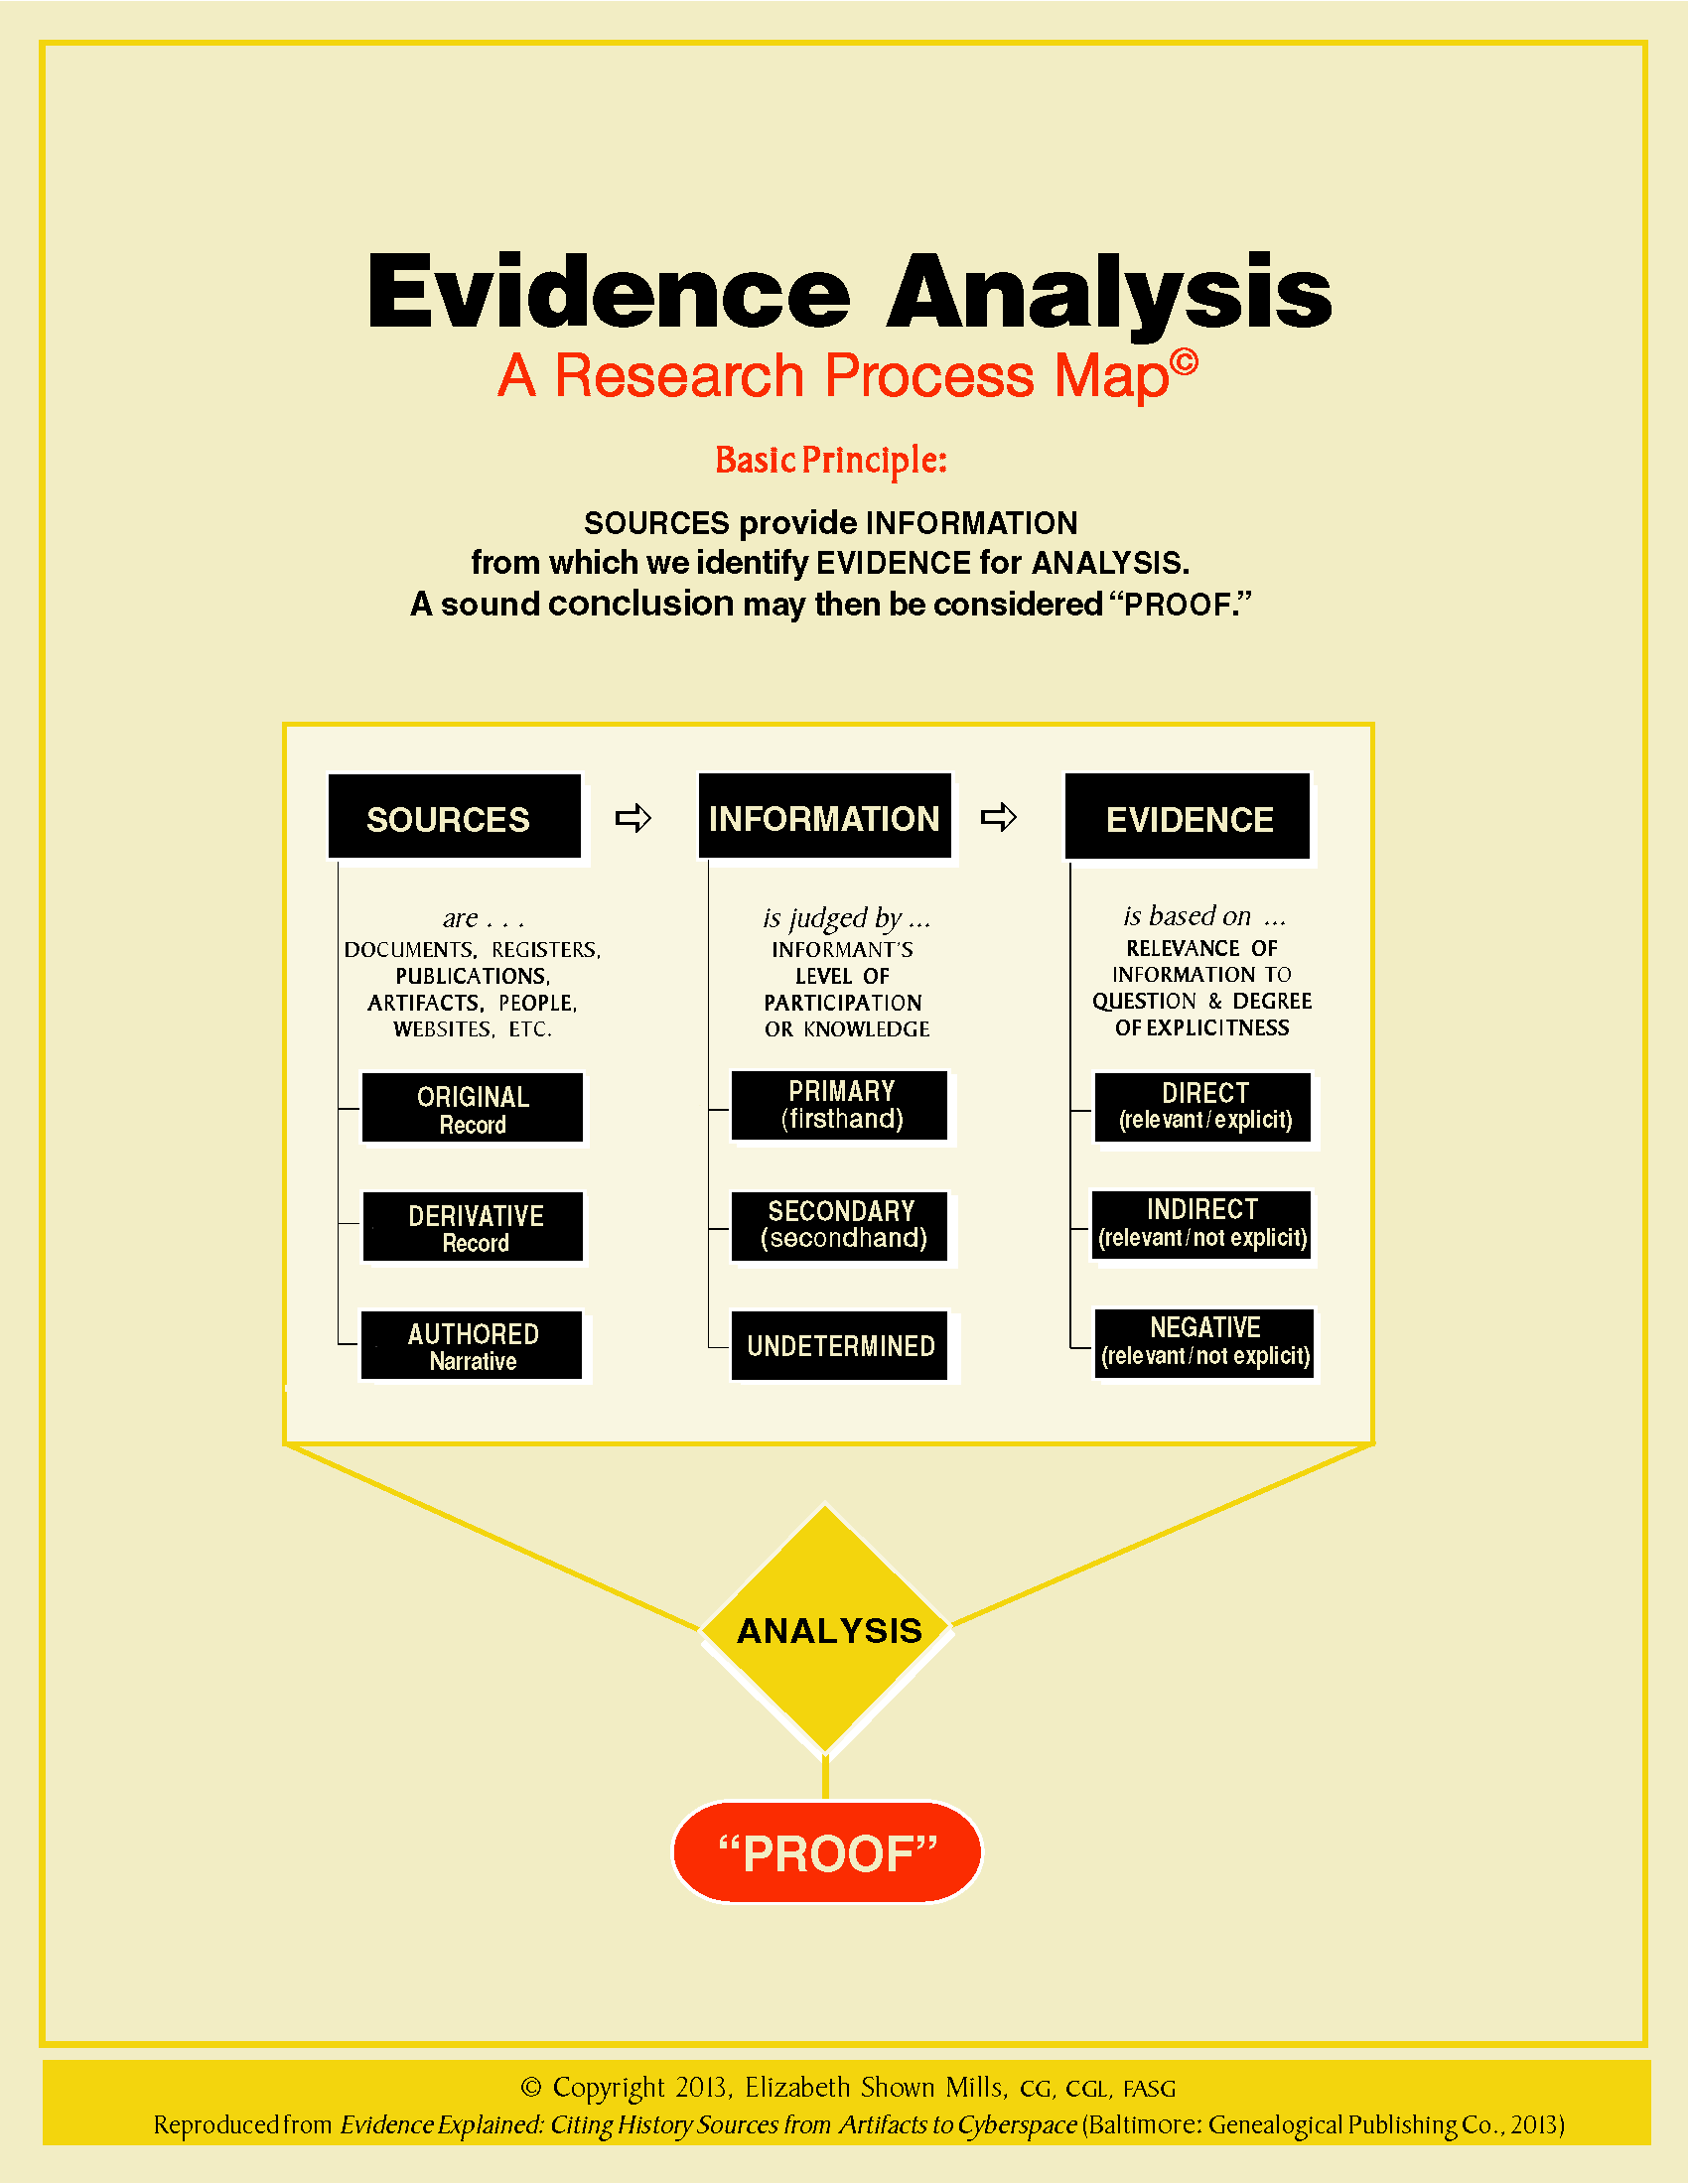 Evidence Analysis Process Map